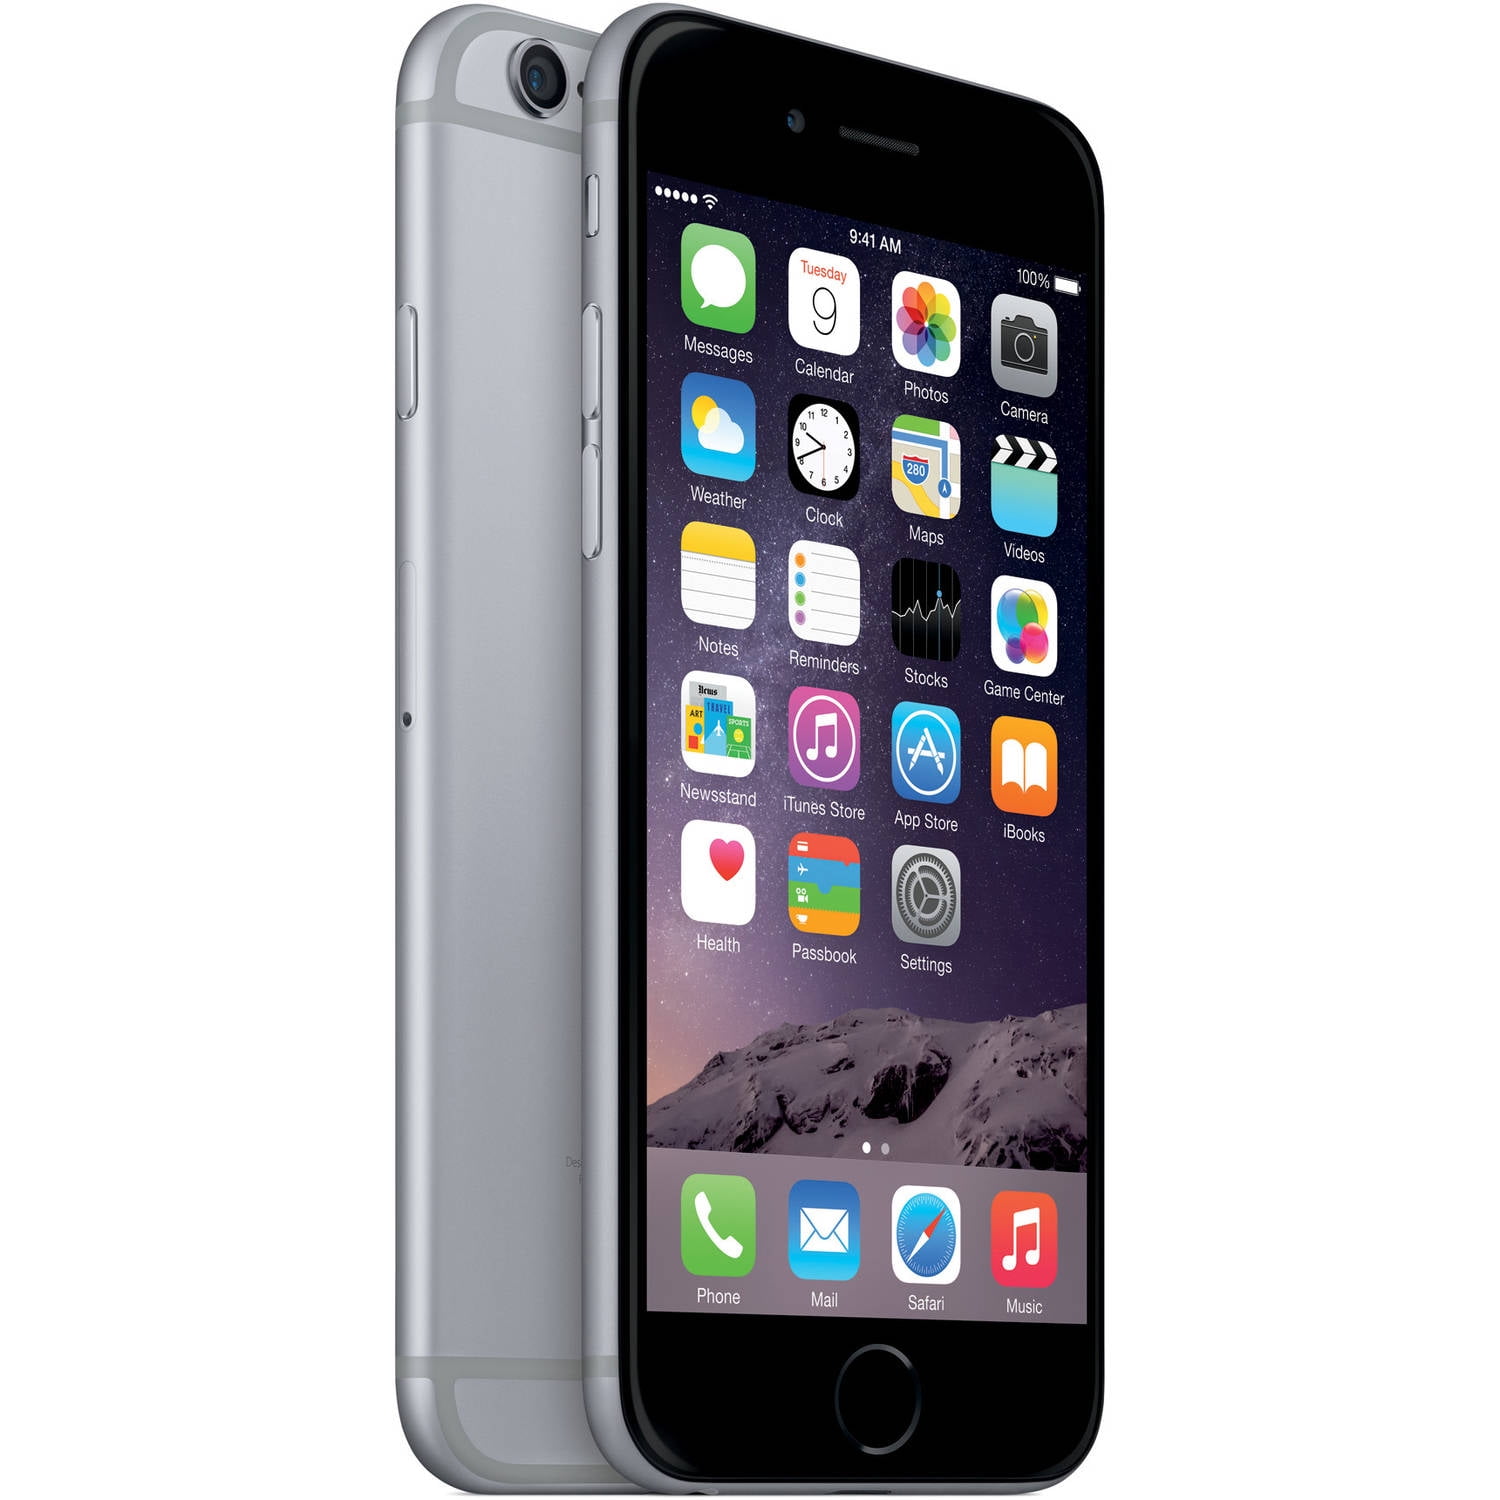 Apple iPhone 6, 64 GB, 1 GB RAM, Single SIM, 8 MP Rear Camera, iOS 8